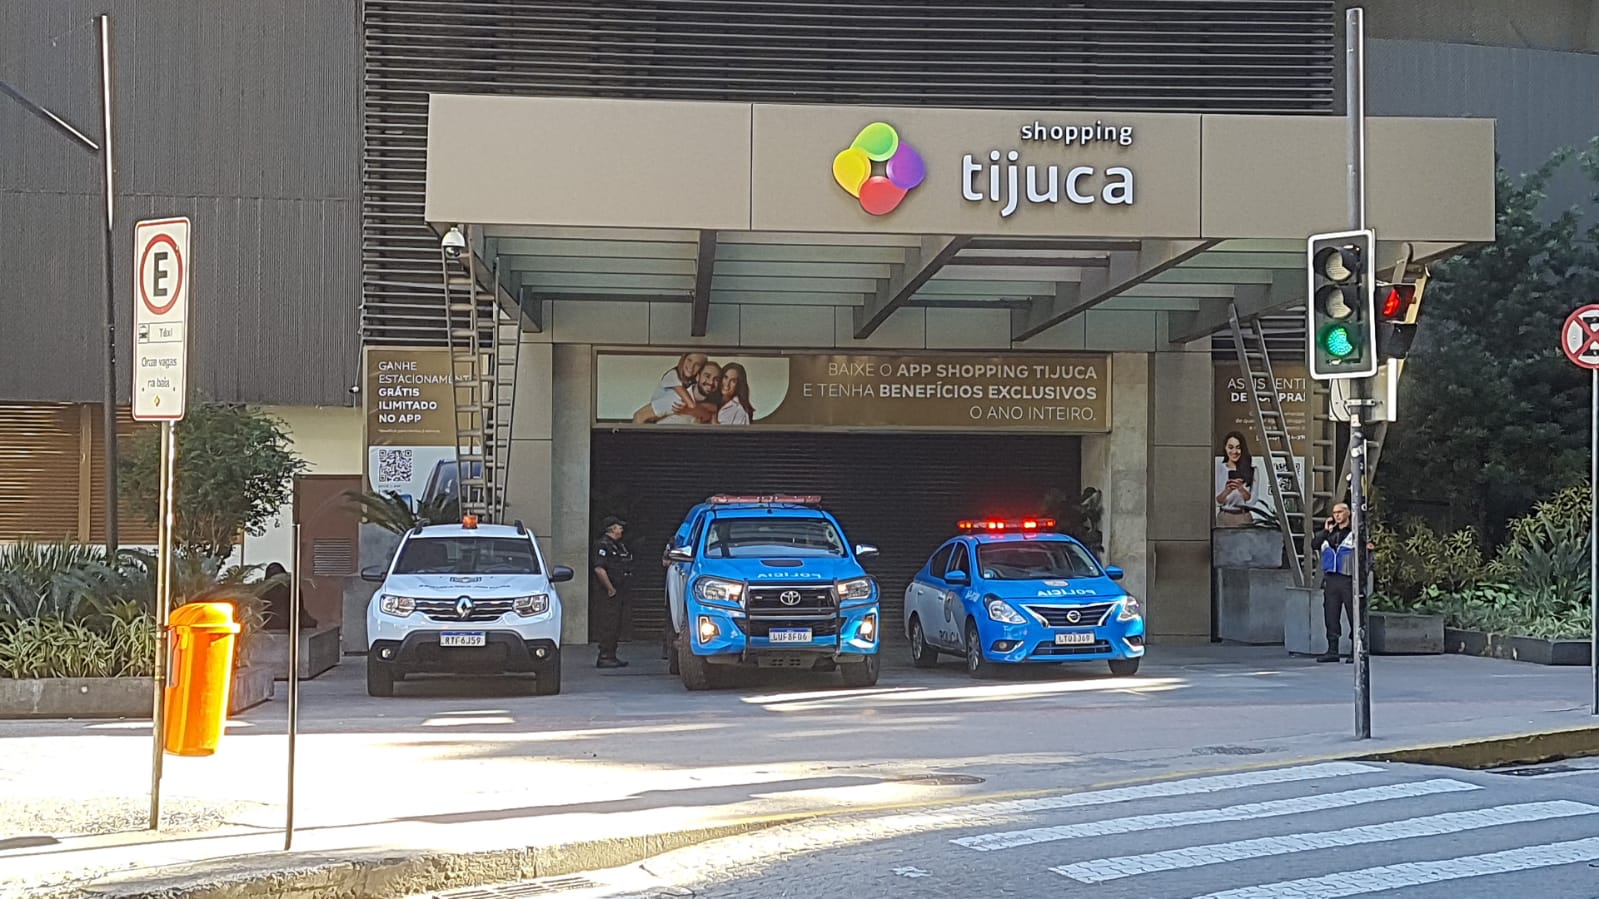 Bandidos tentam assaltar joalheria no Shopping Tijuca